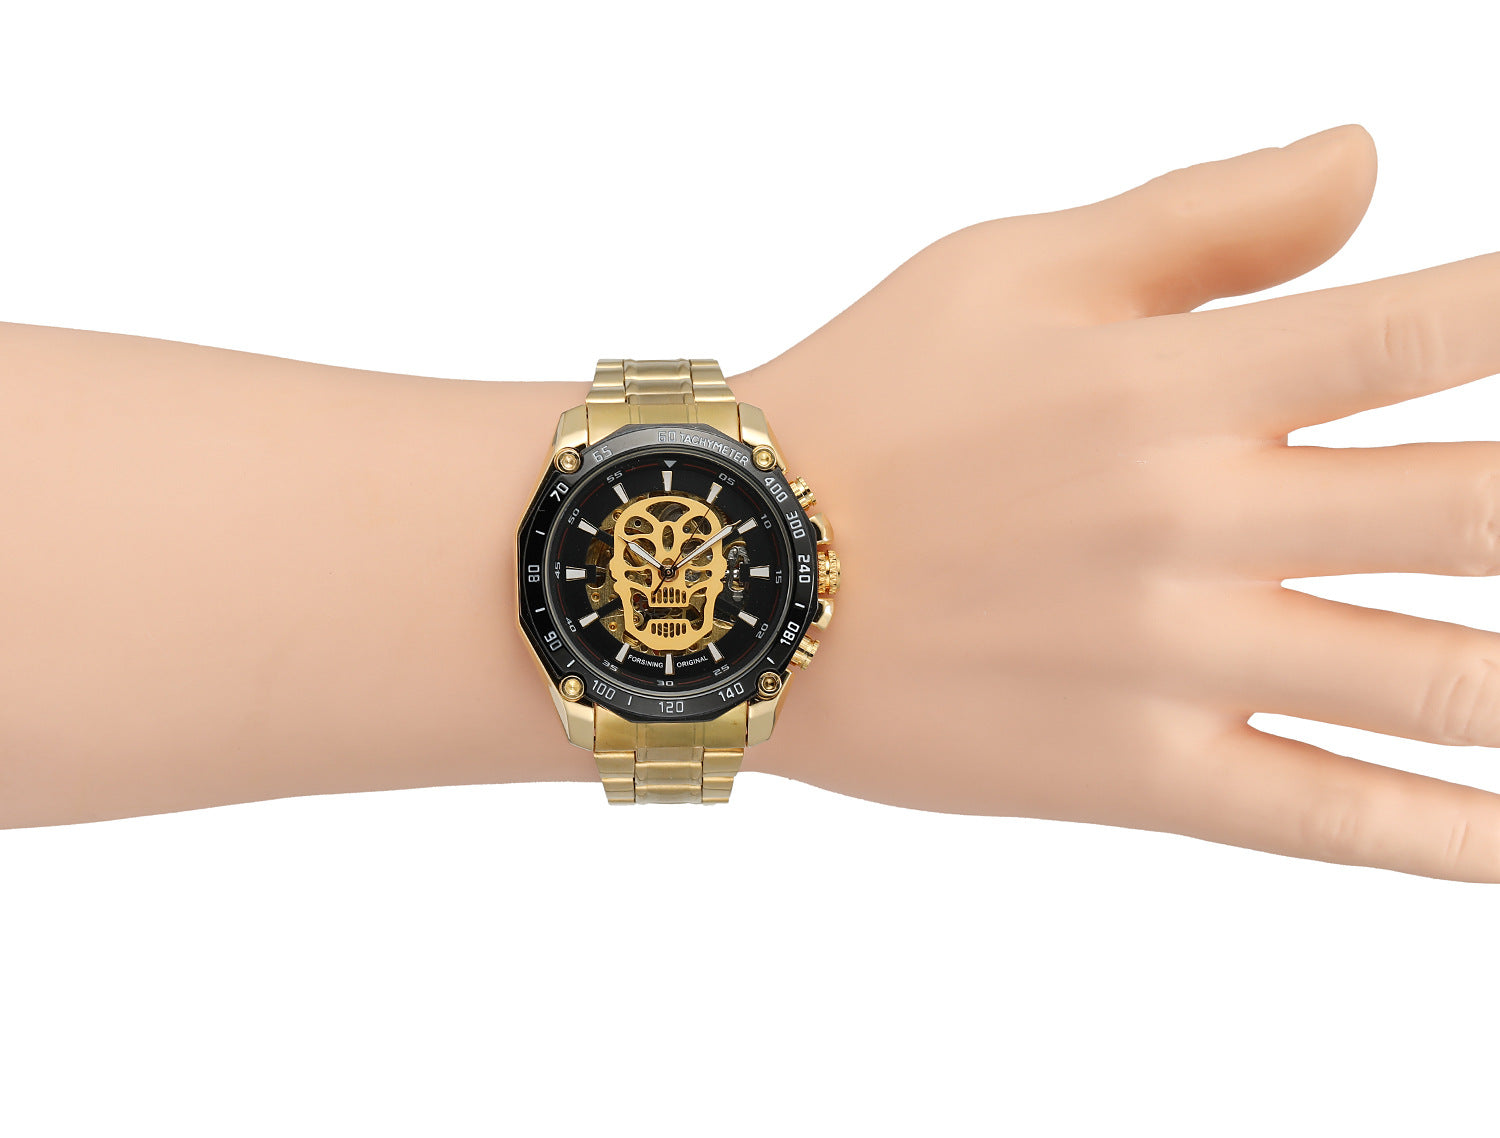 A Maramalive™ Steampunk Fashion Skull Design Black Golden Luminous Hands Skeleton Men's Mechanical Wrist Watch on a white background.